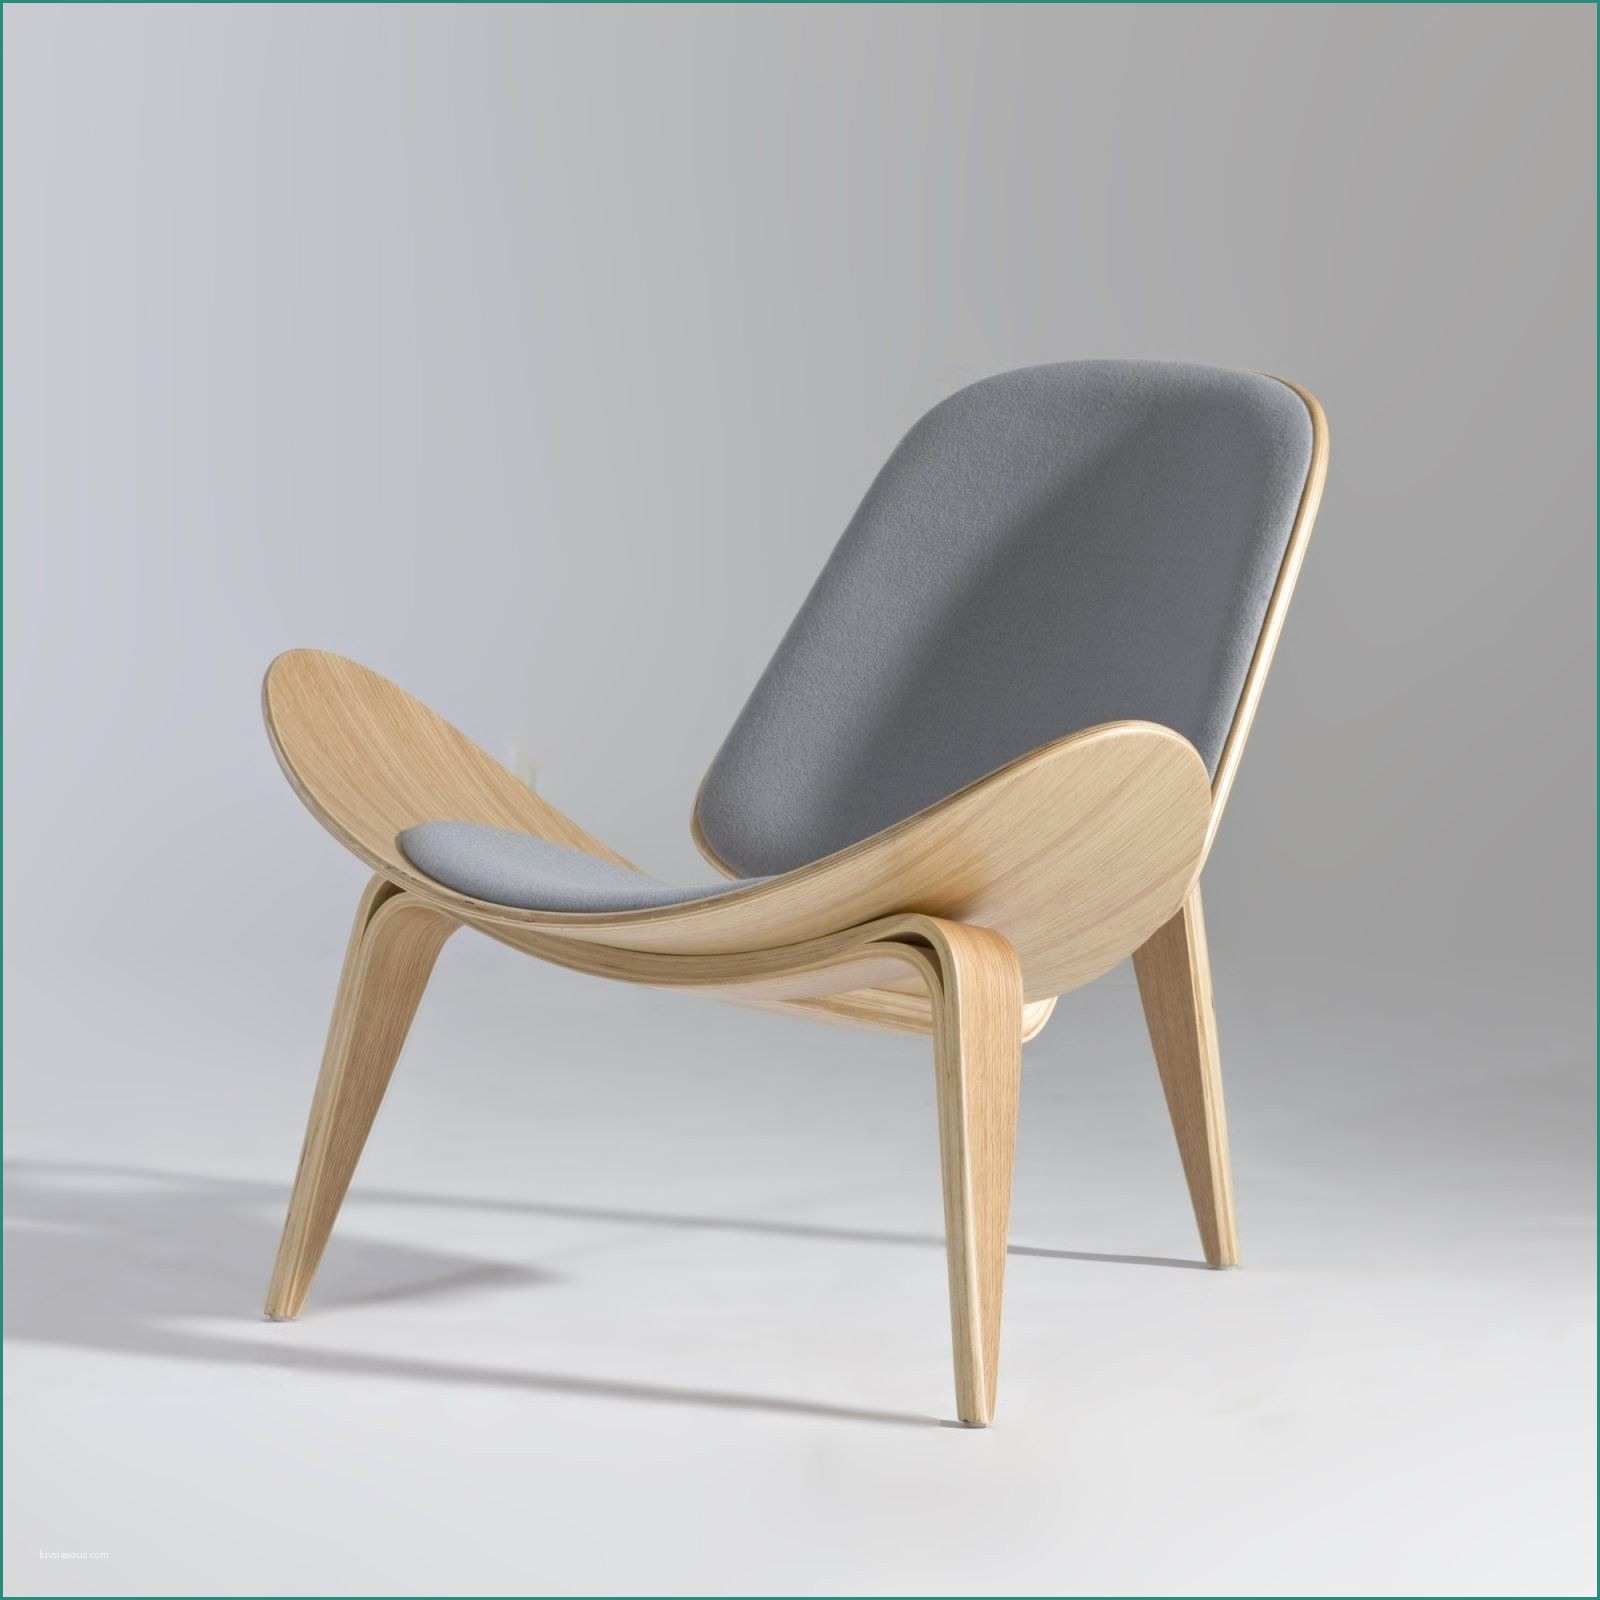 Alvar Aalto Sedie E Hans J Wegner Shell Chair Designed In 1948 and Alvar Aalto´s